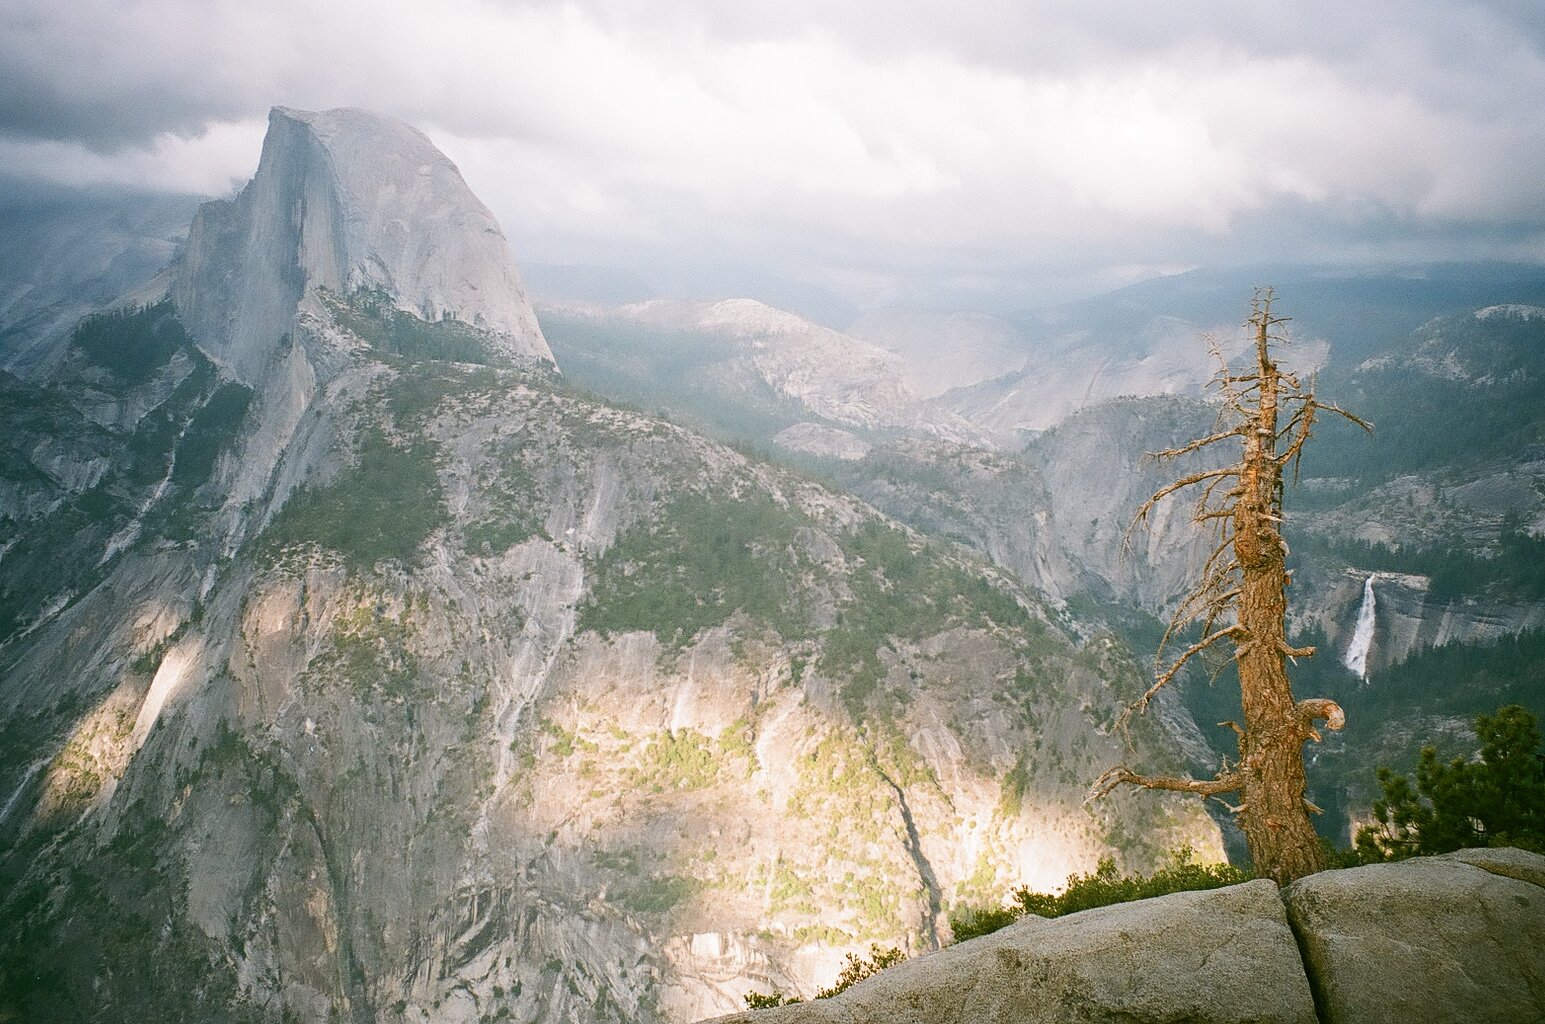  Yosemite National Park, California. 2021. 